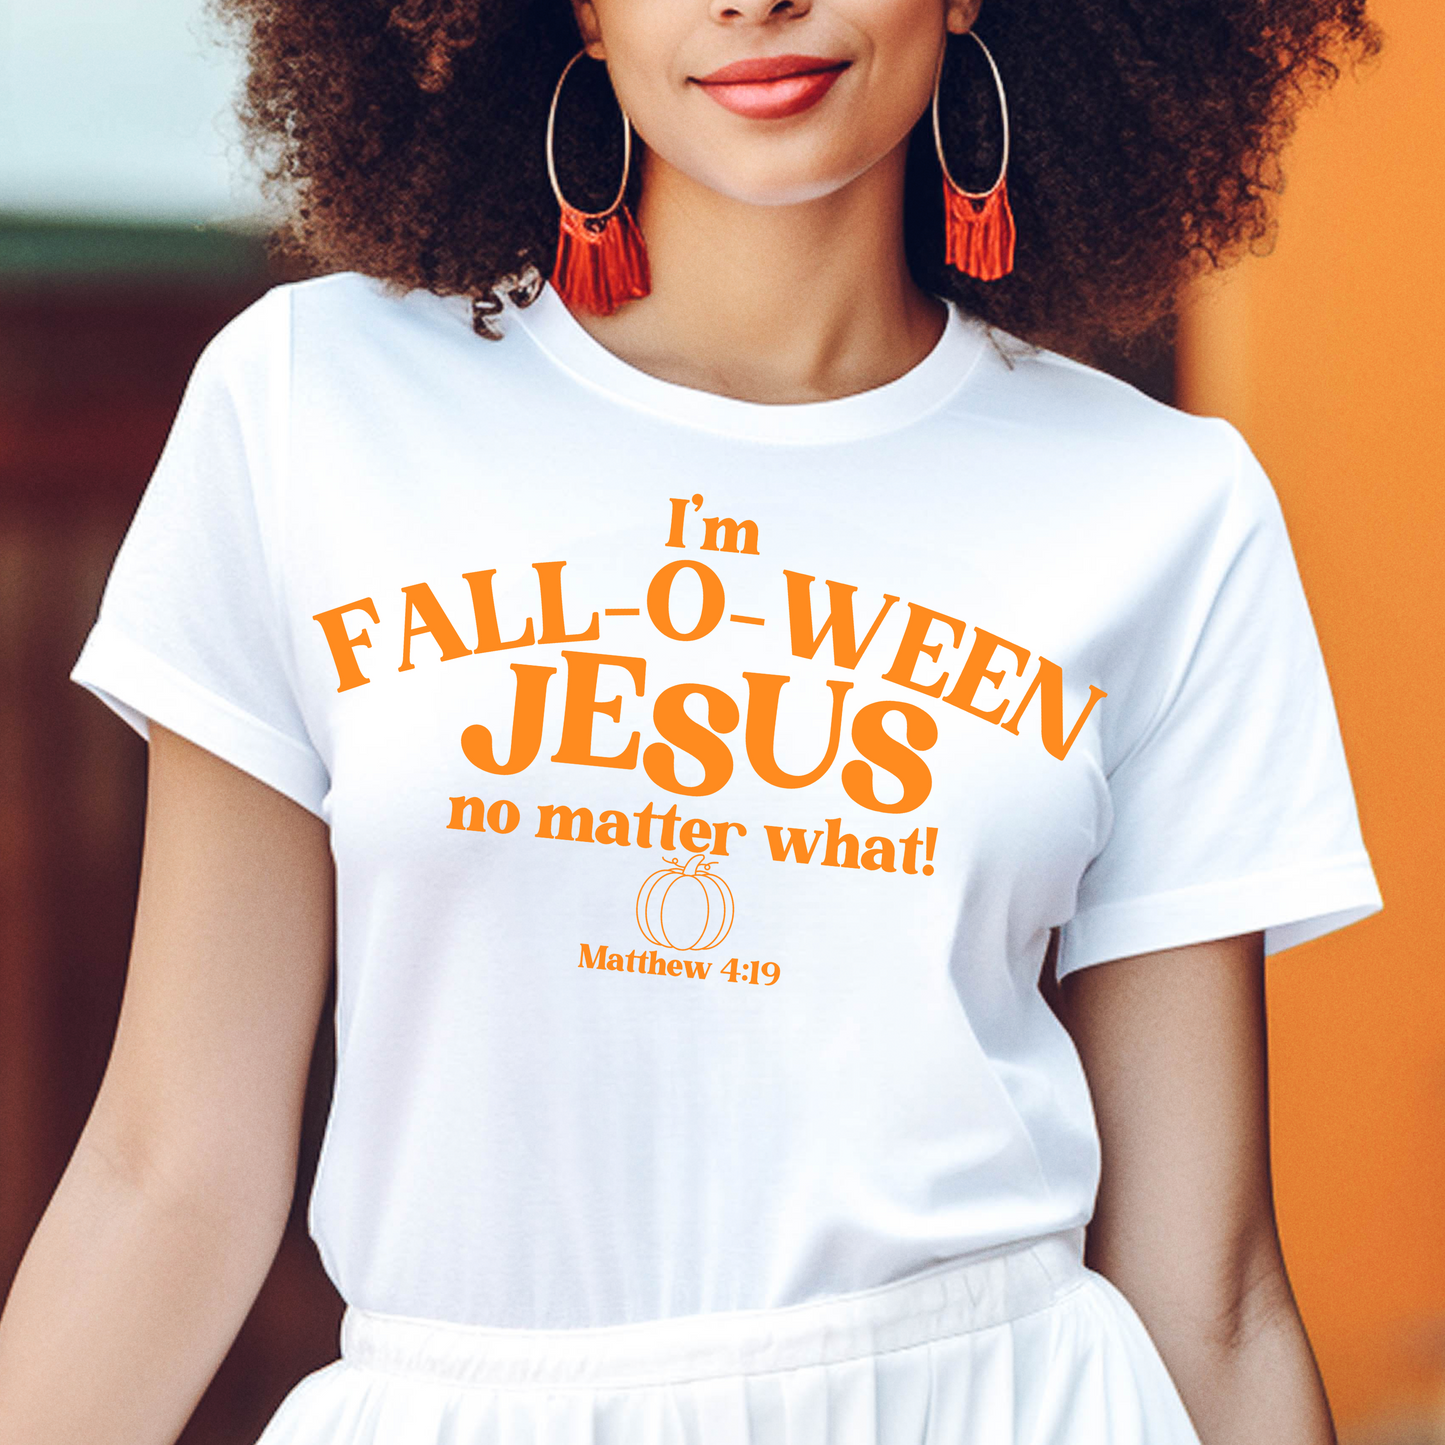 I'm Falloween Jesus T-Shirt